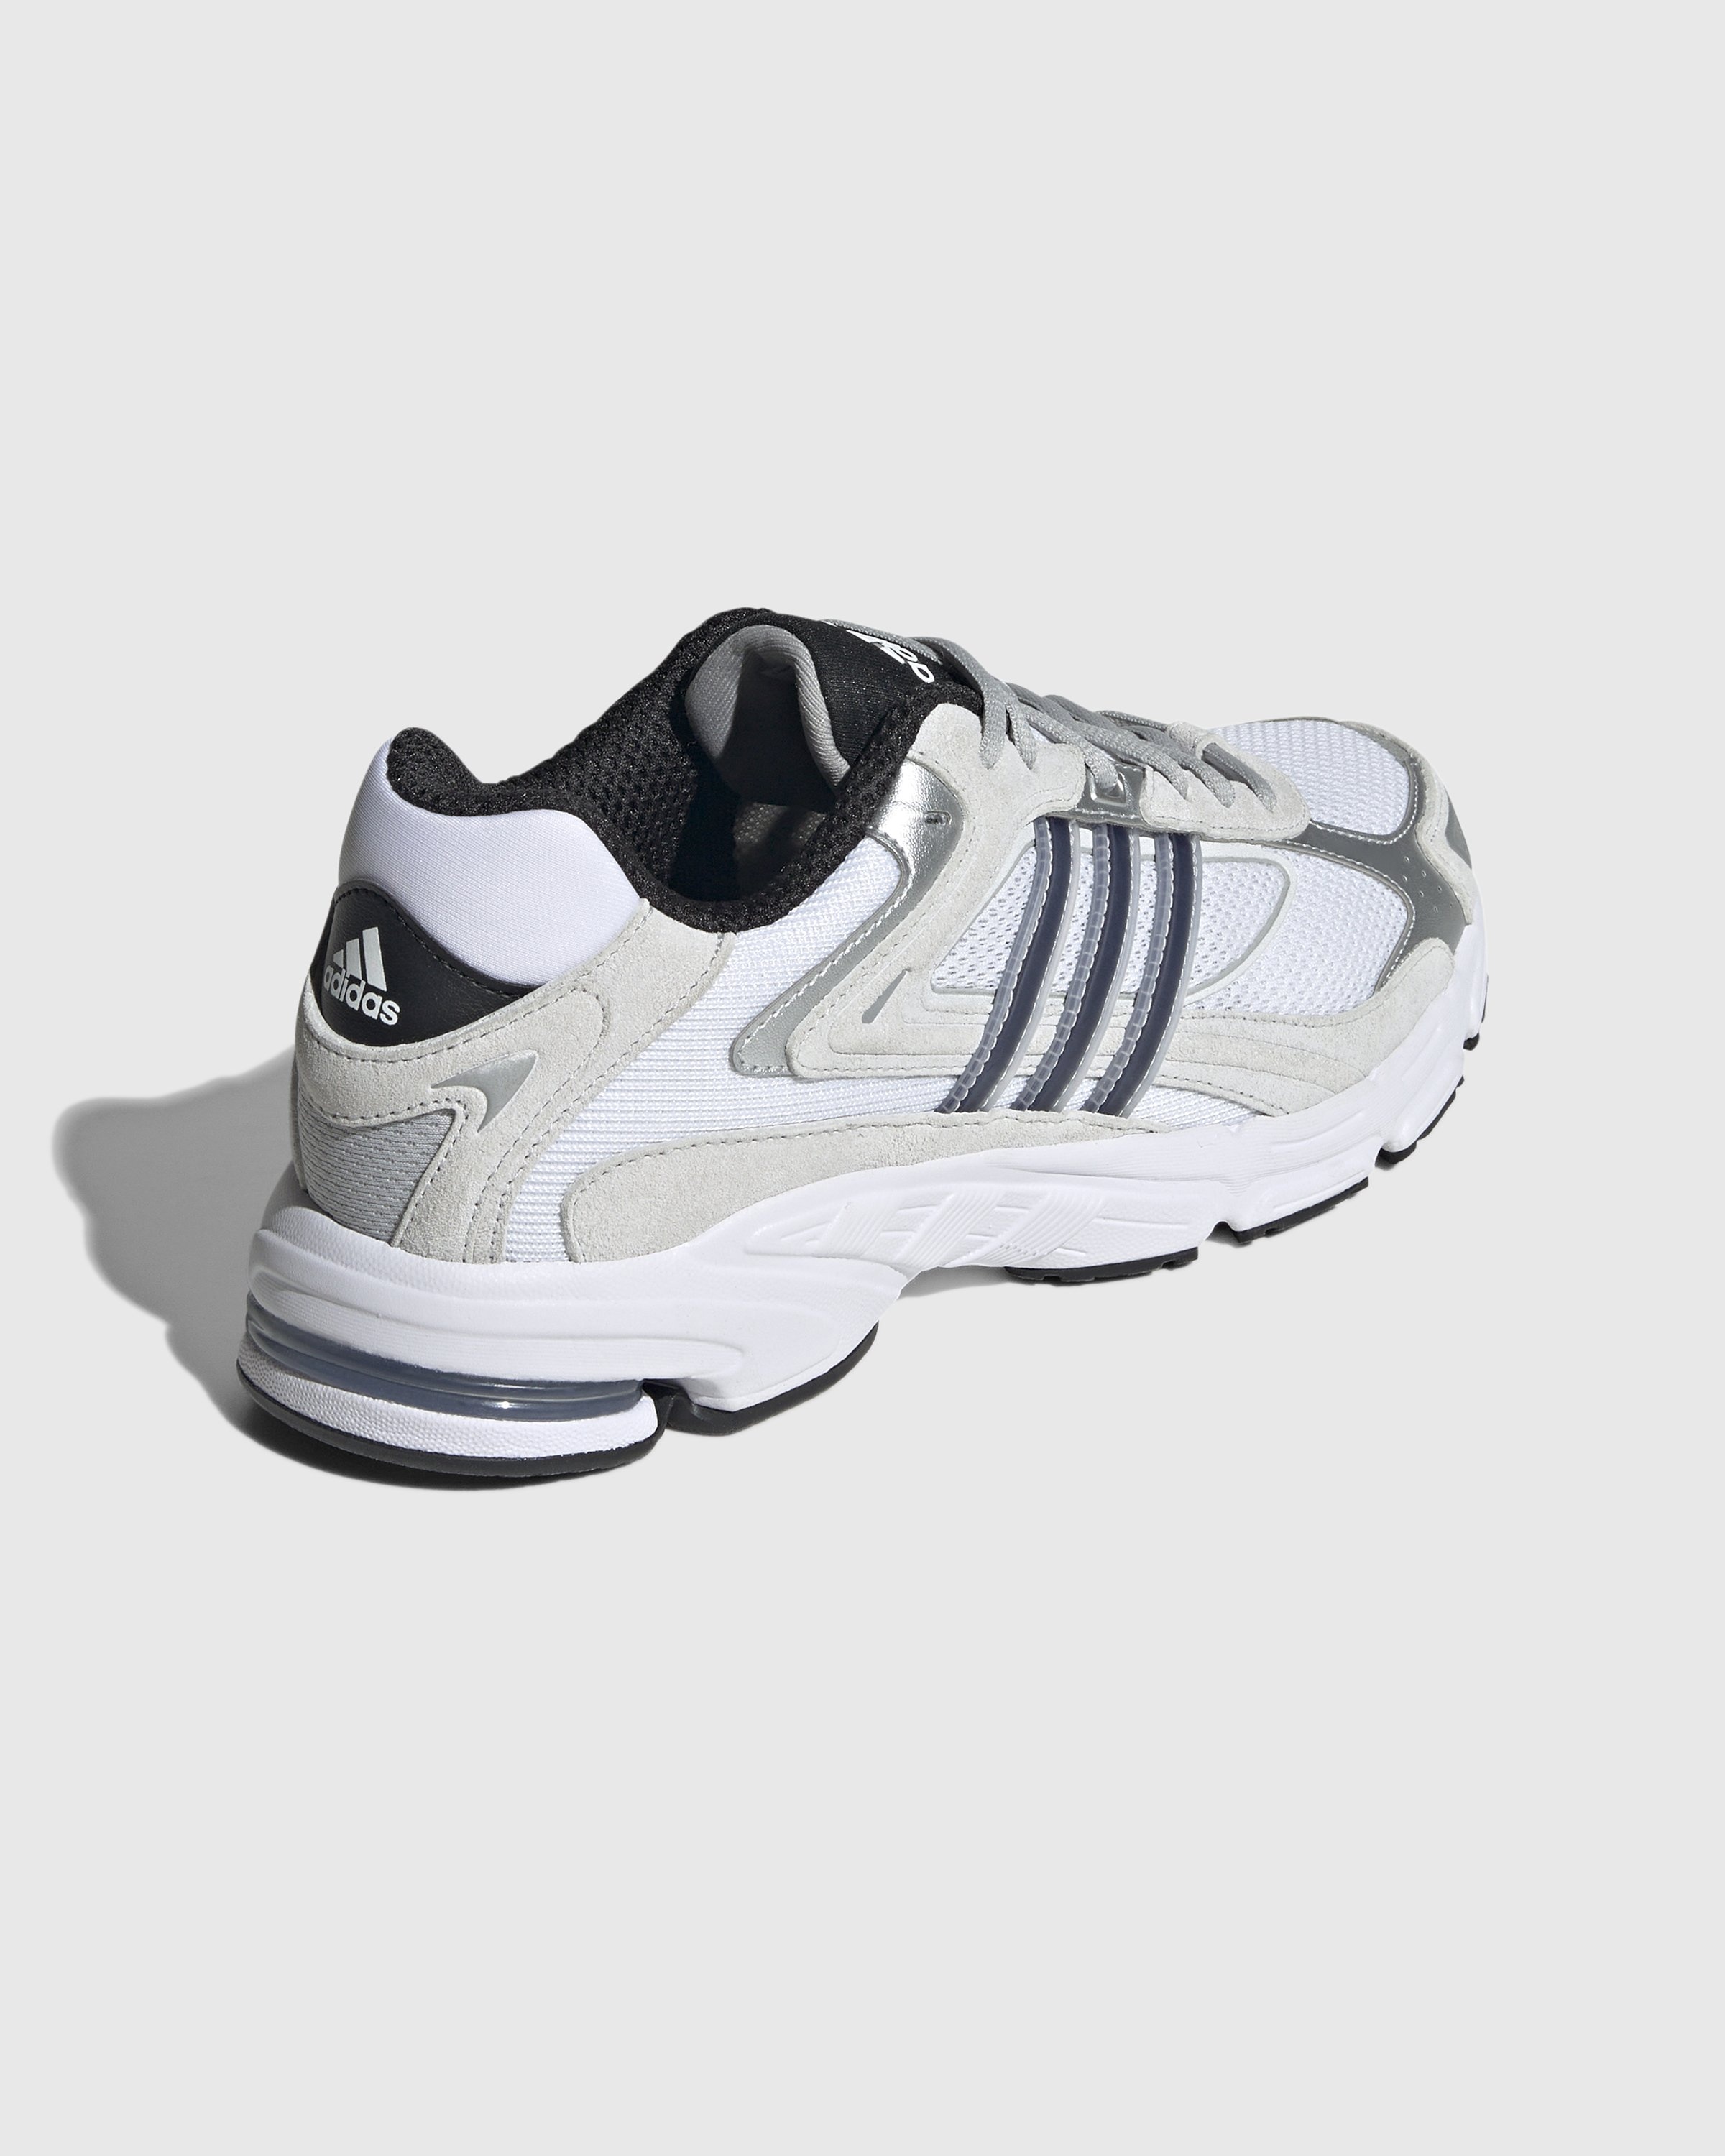 Adidas – Response White/Black Shop CL | Highsnobiety